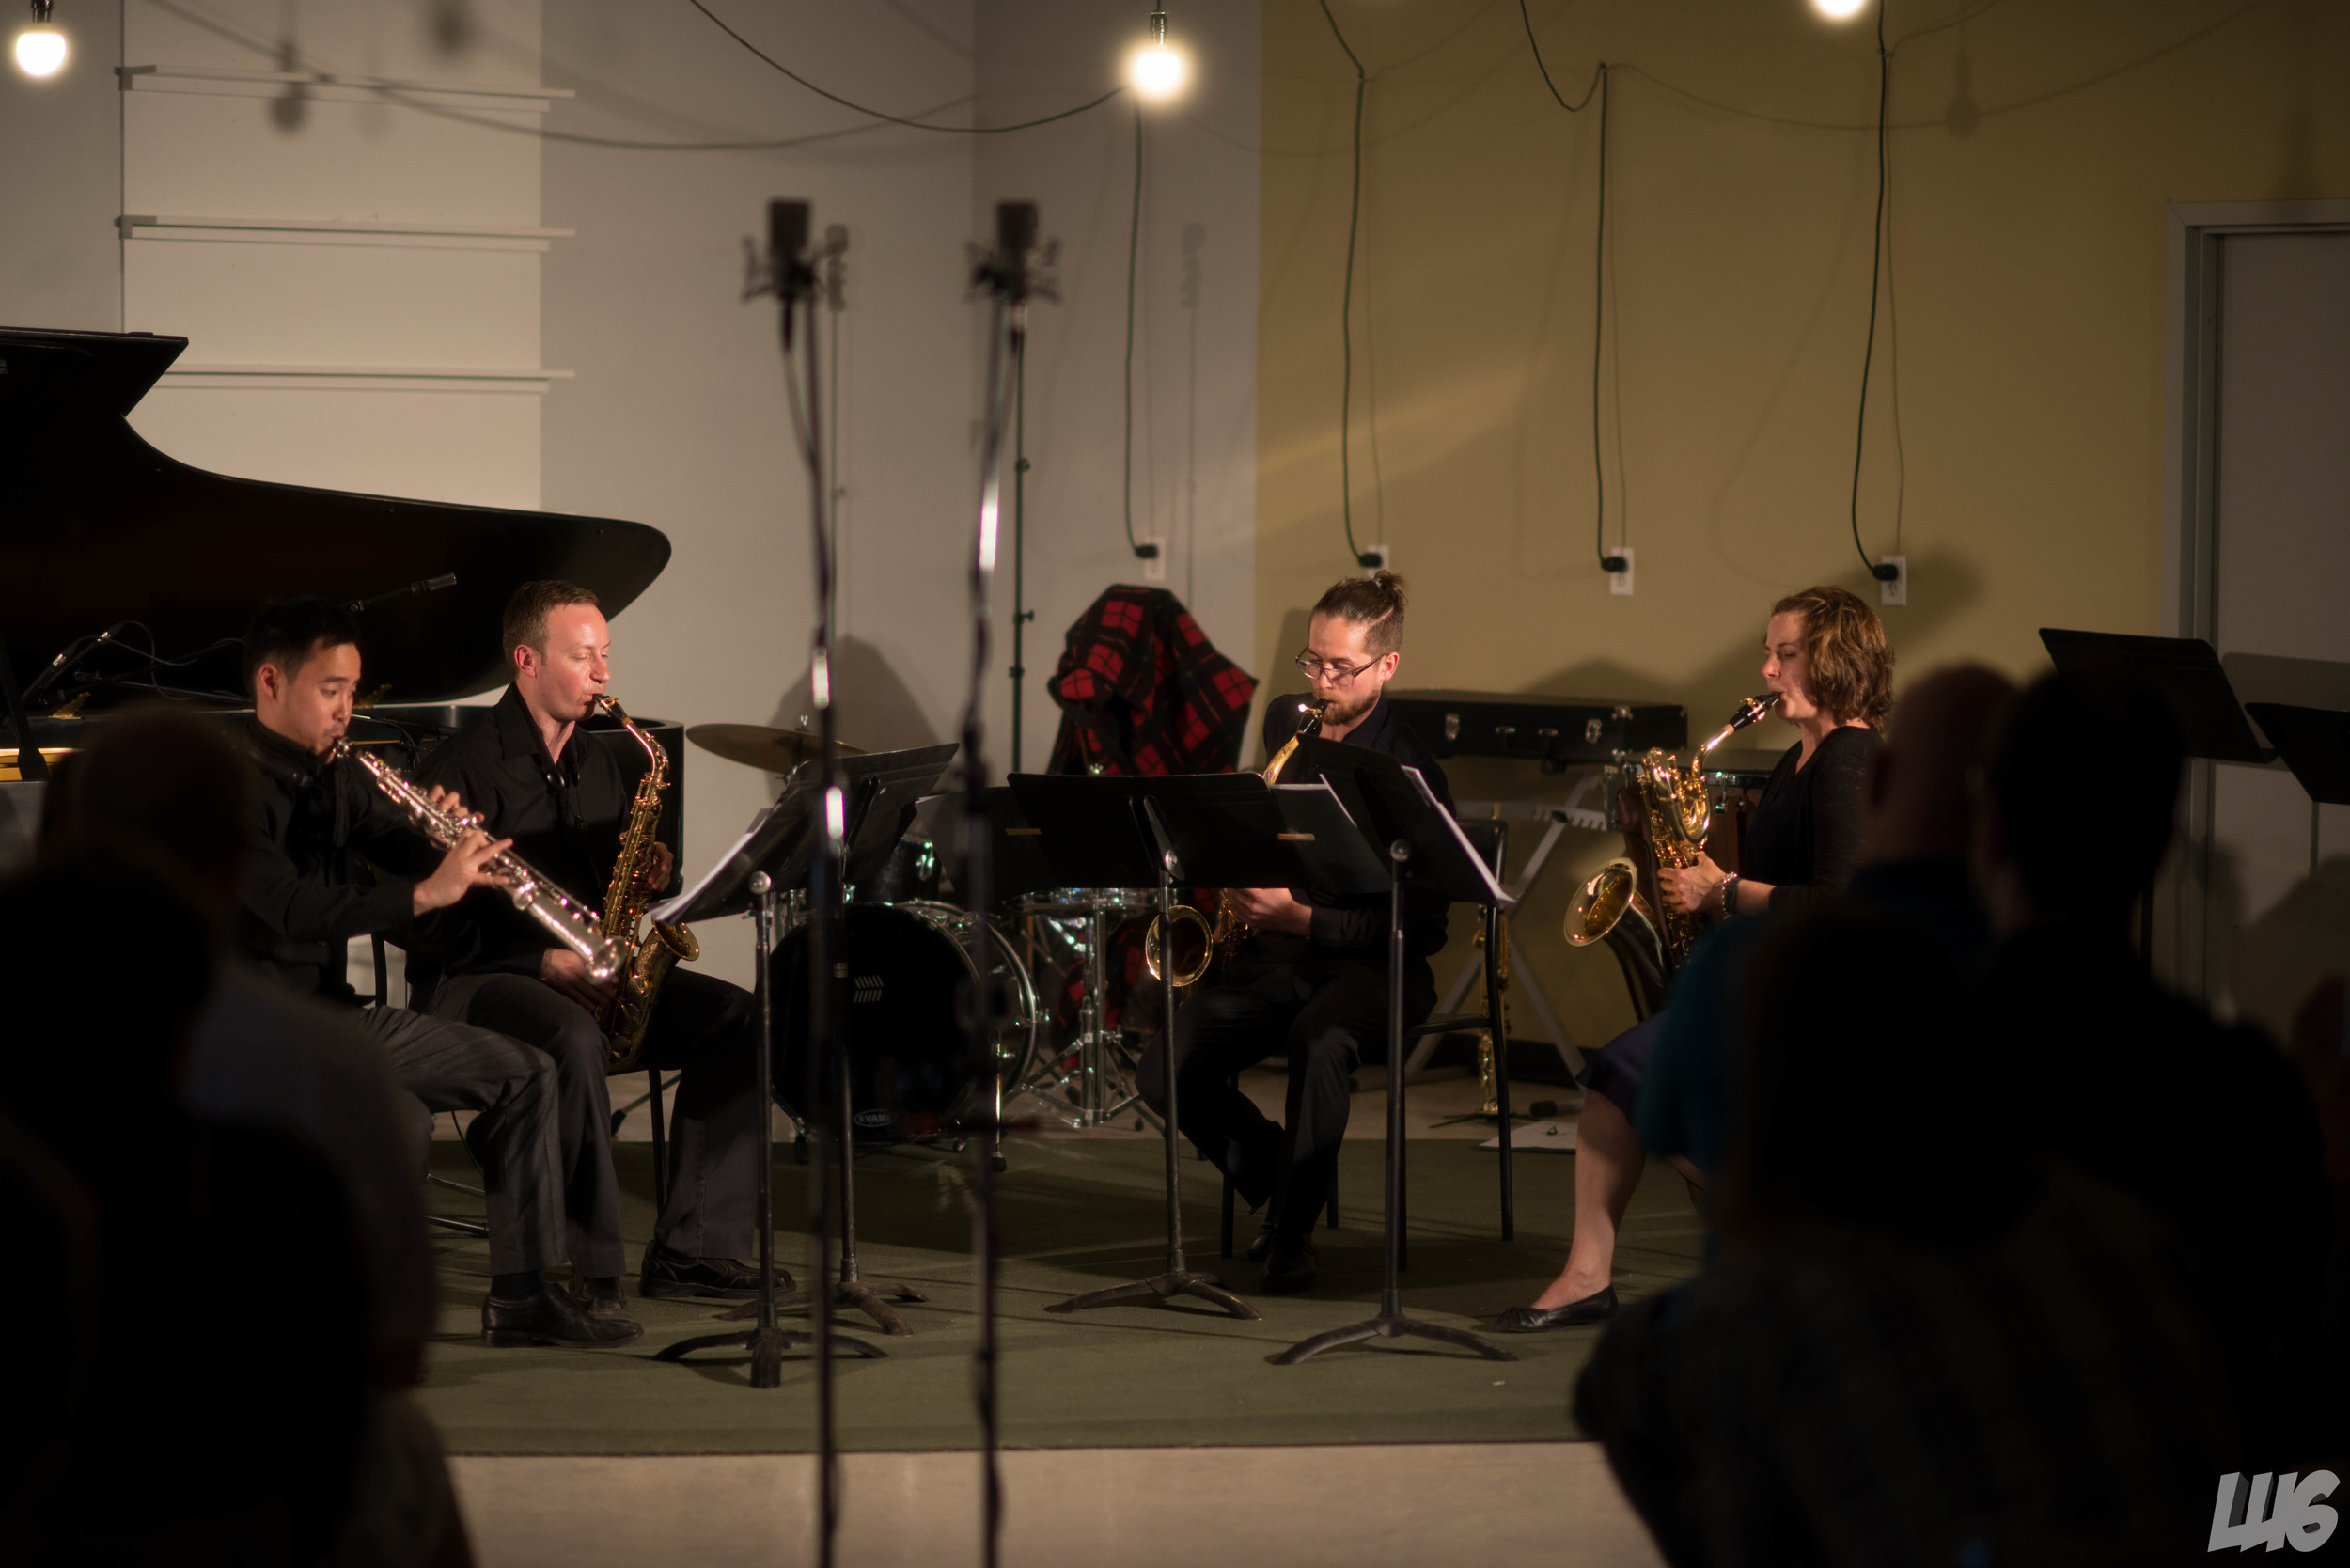  Proteus Quartet, Strata New Music Festival (2015), Saskatoon, Canada 